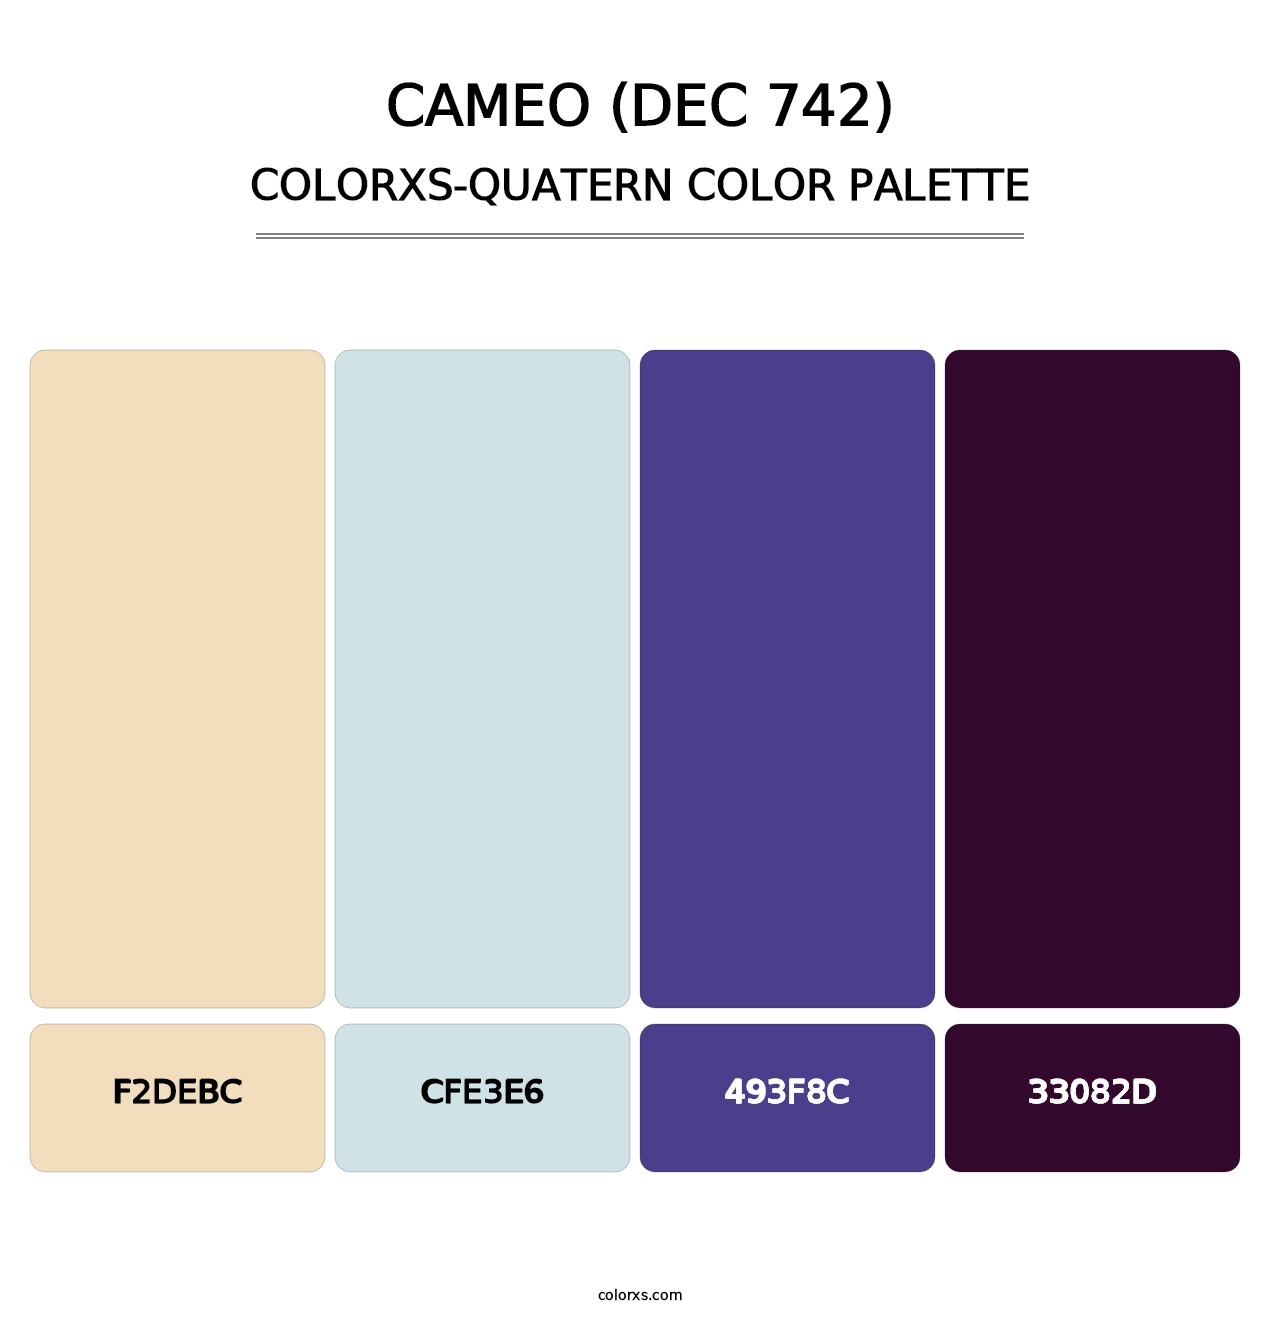 Cameo (DEC 742) - Colorxs Quatern Palette